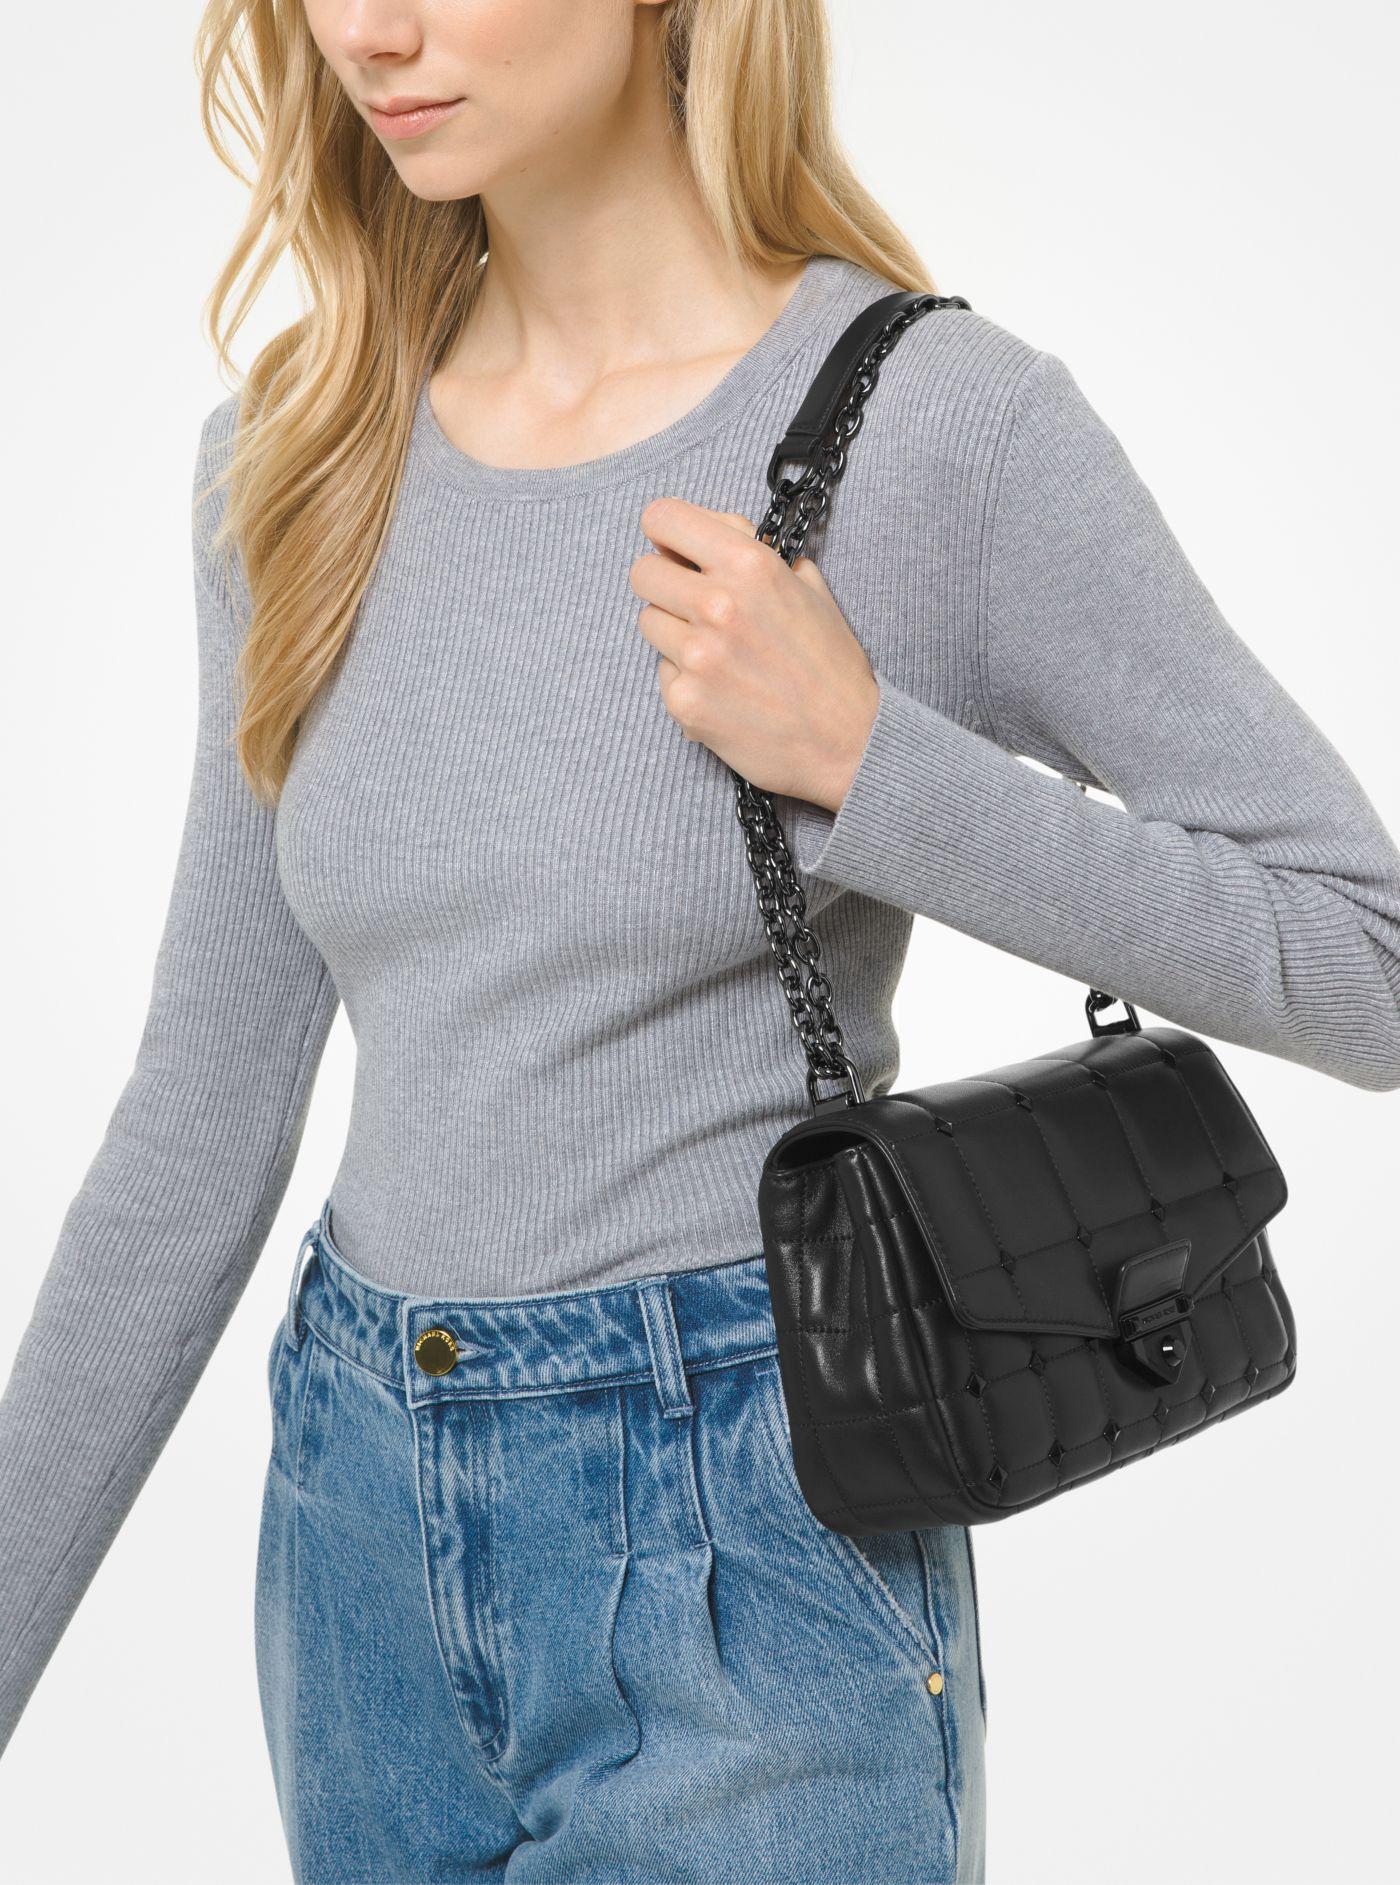 Michael Kors Soho Large Studded Quilted Leather Shoulder Bag in 